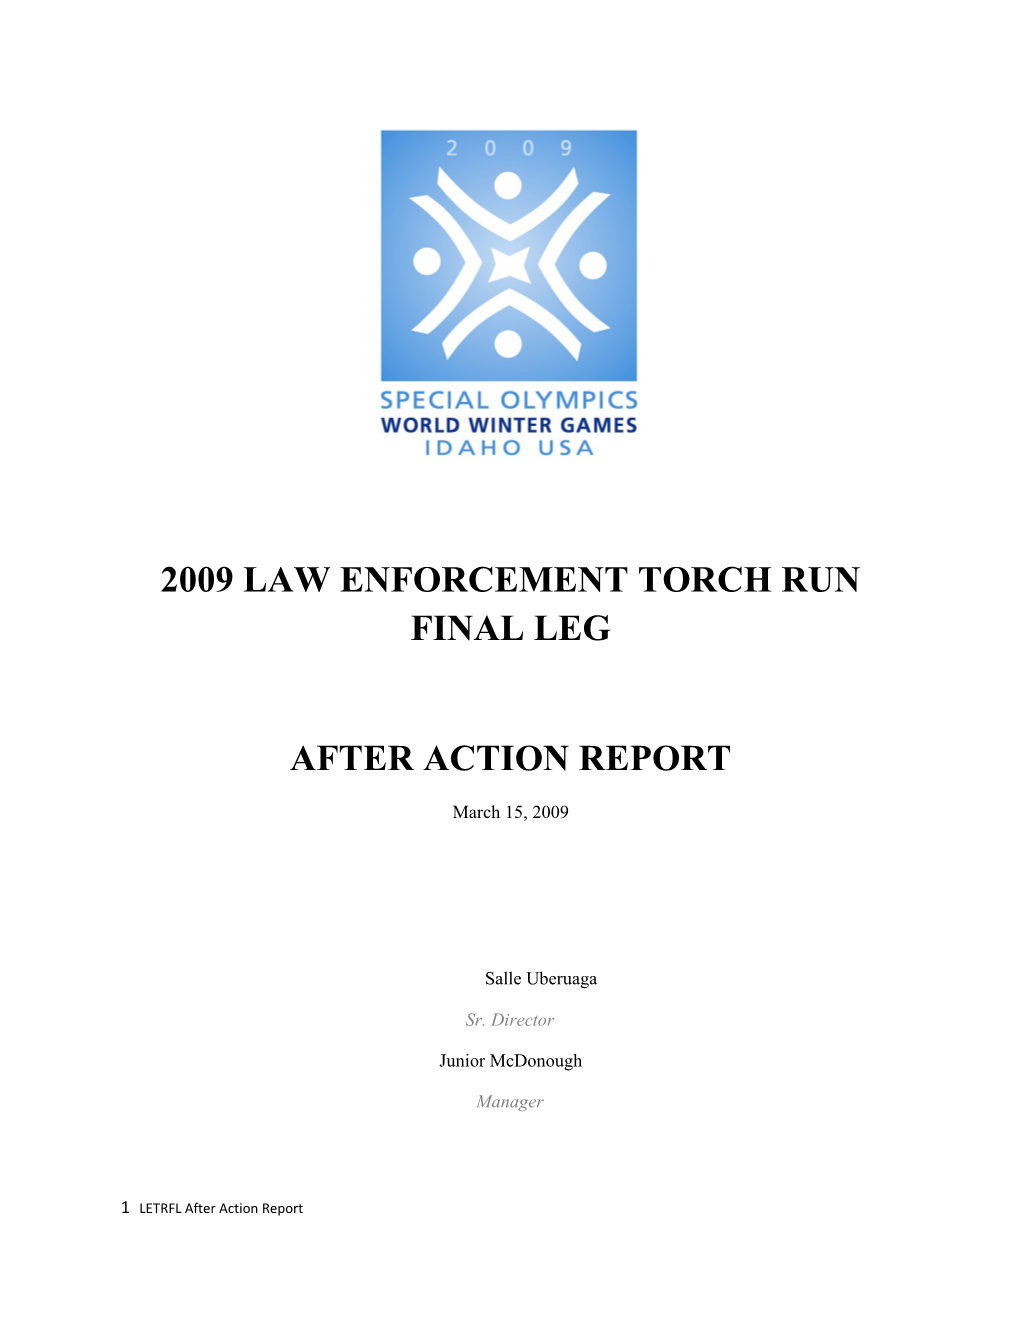 2009 Law Enforcement Torch Run Final Leg